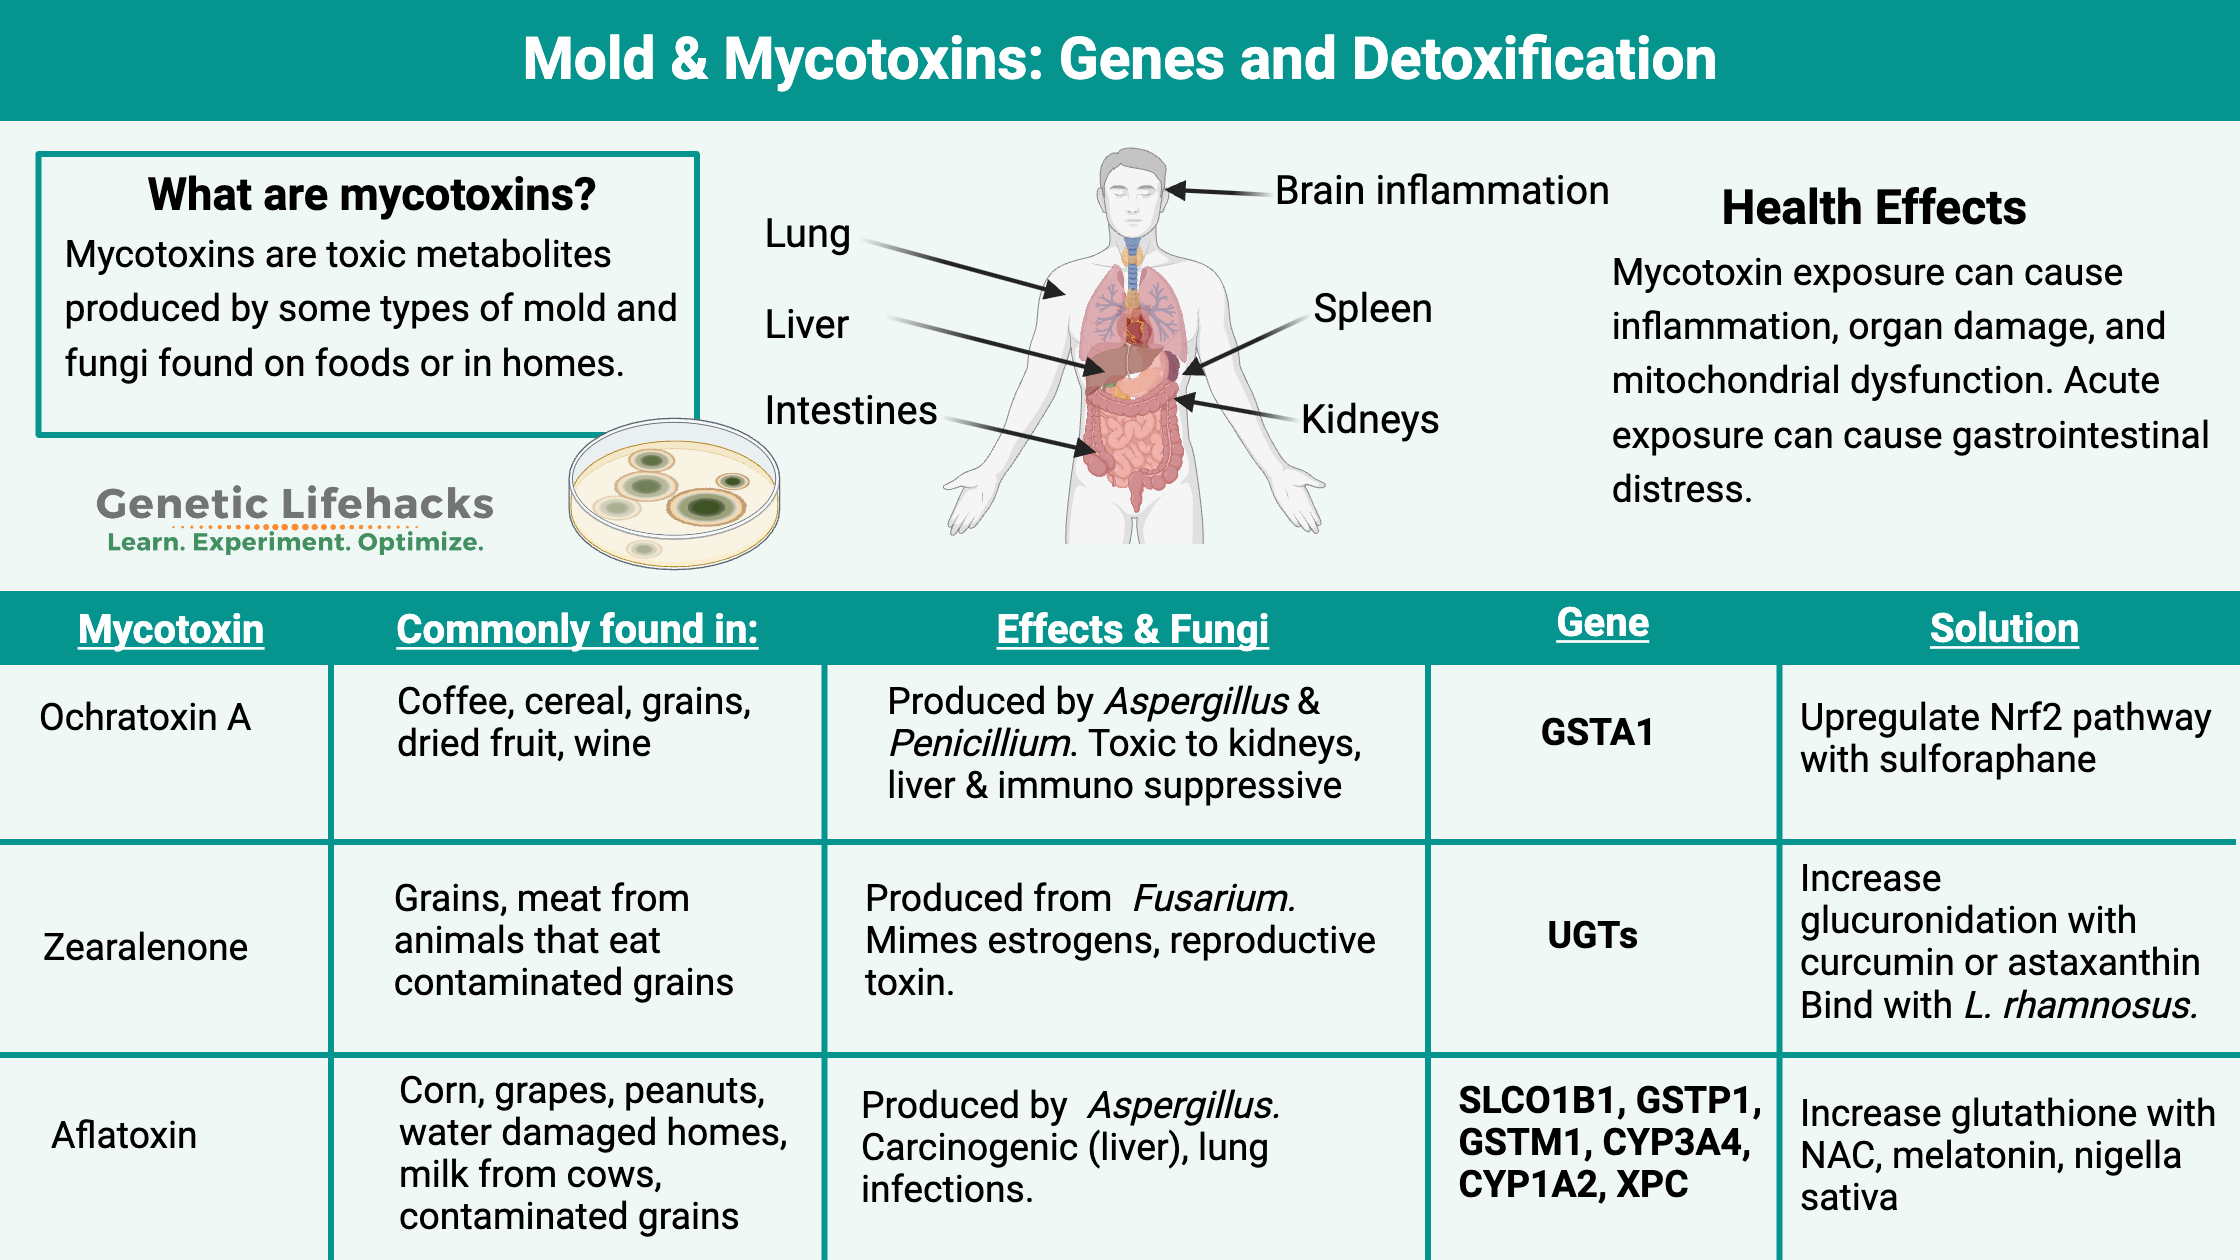 Mycotoxins, Mold genes, mycotoxins detoxification